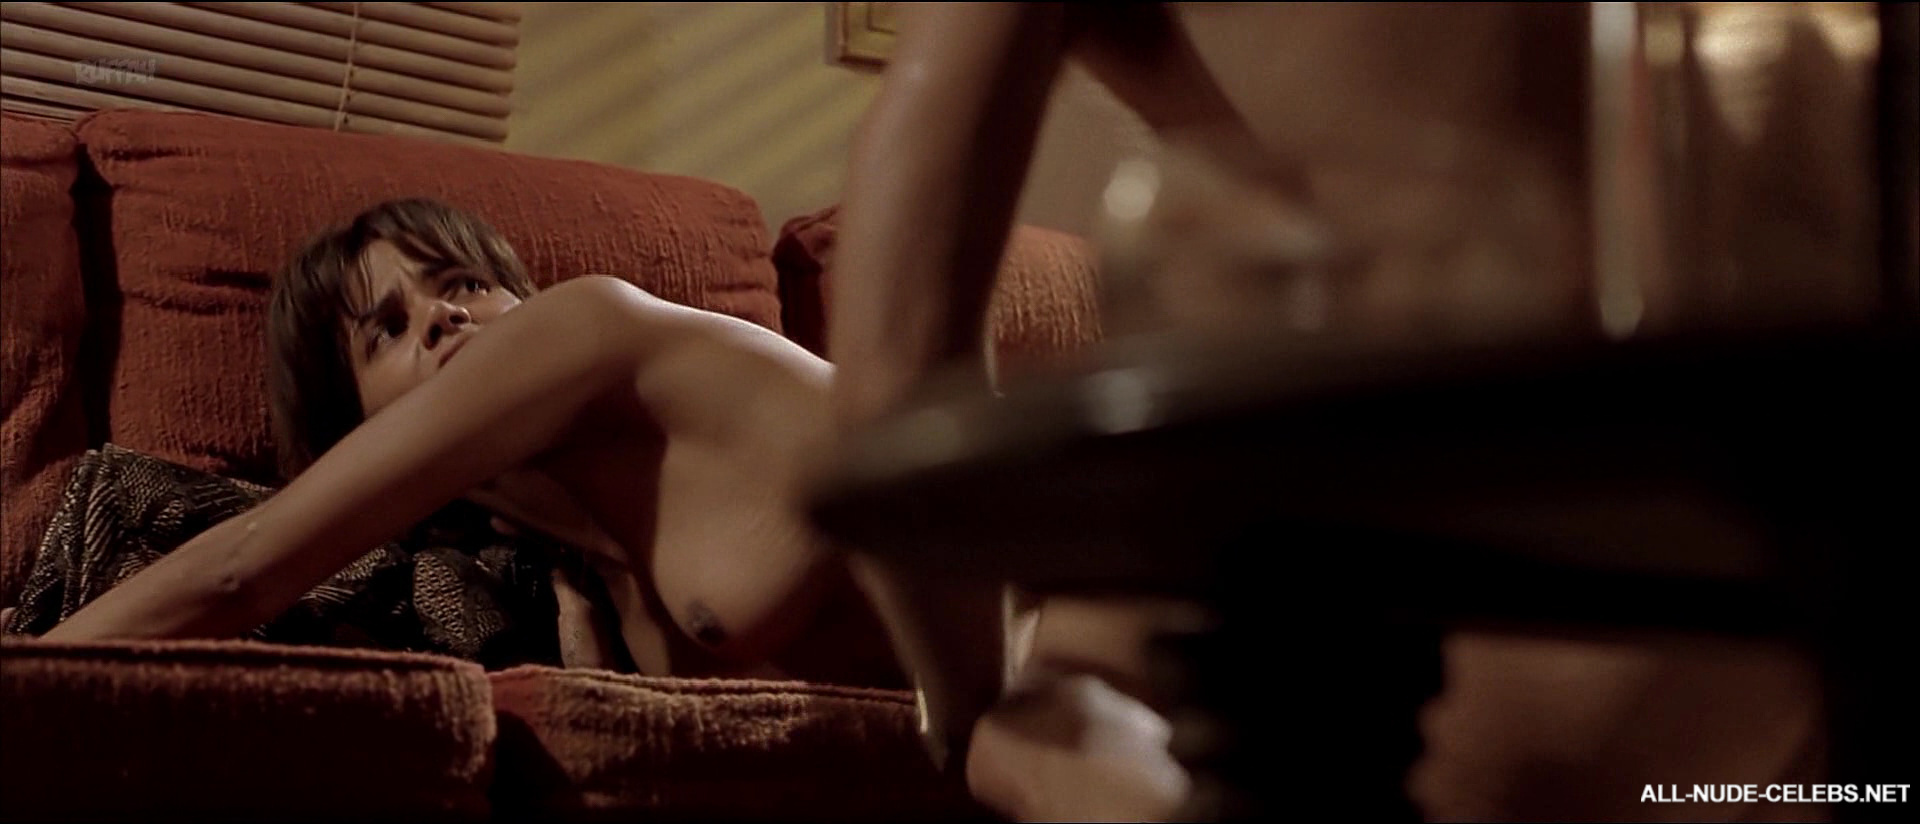 Halle Berry rough sex movie scenes.